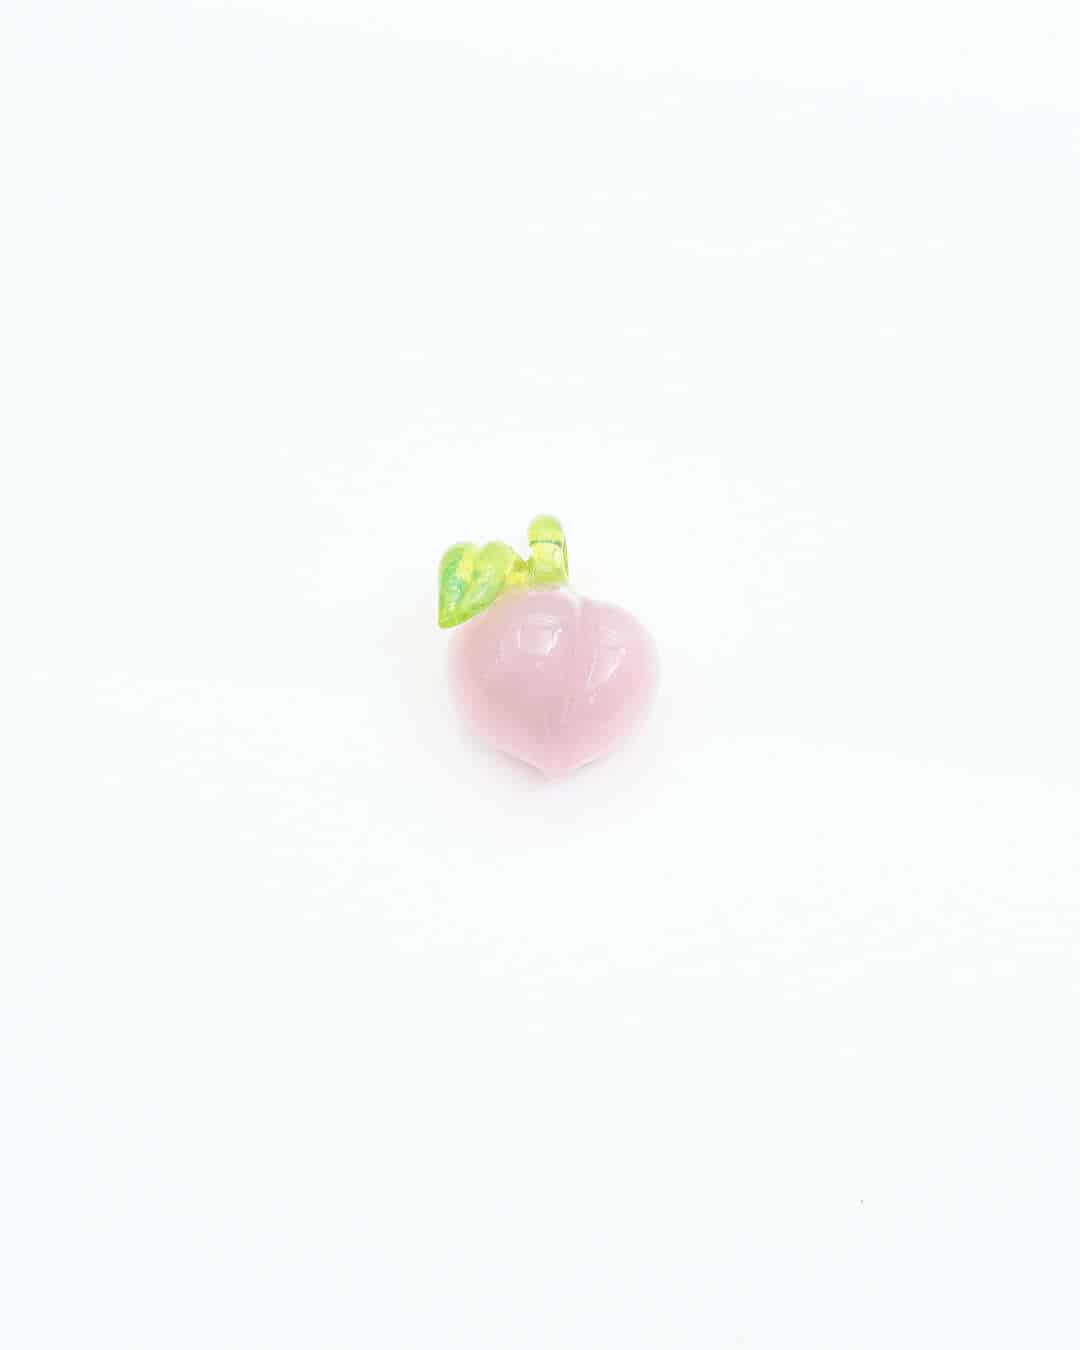 heady glass pendant - (12C) Pink Peach w/ Translucent Green Stem Pendant by Gnarla Carla